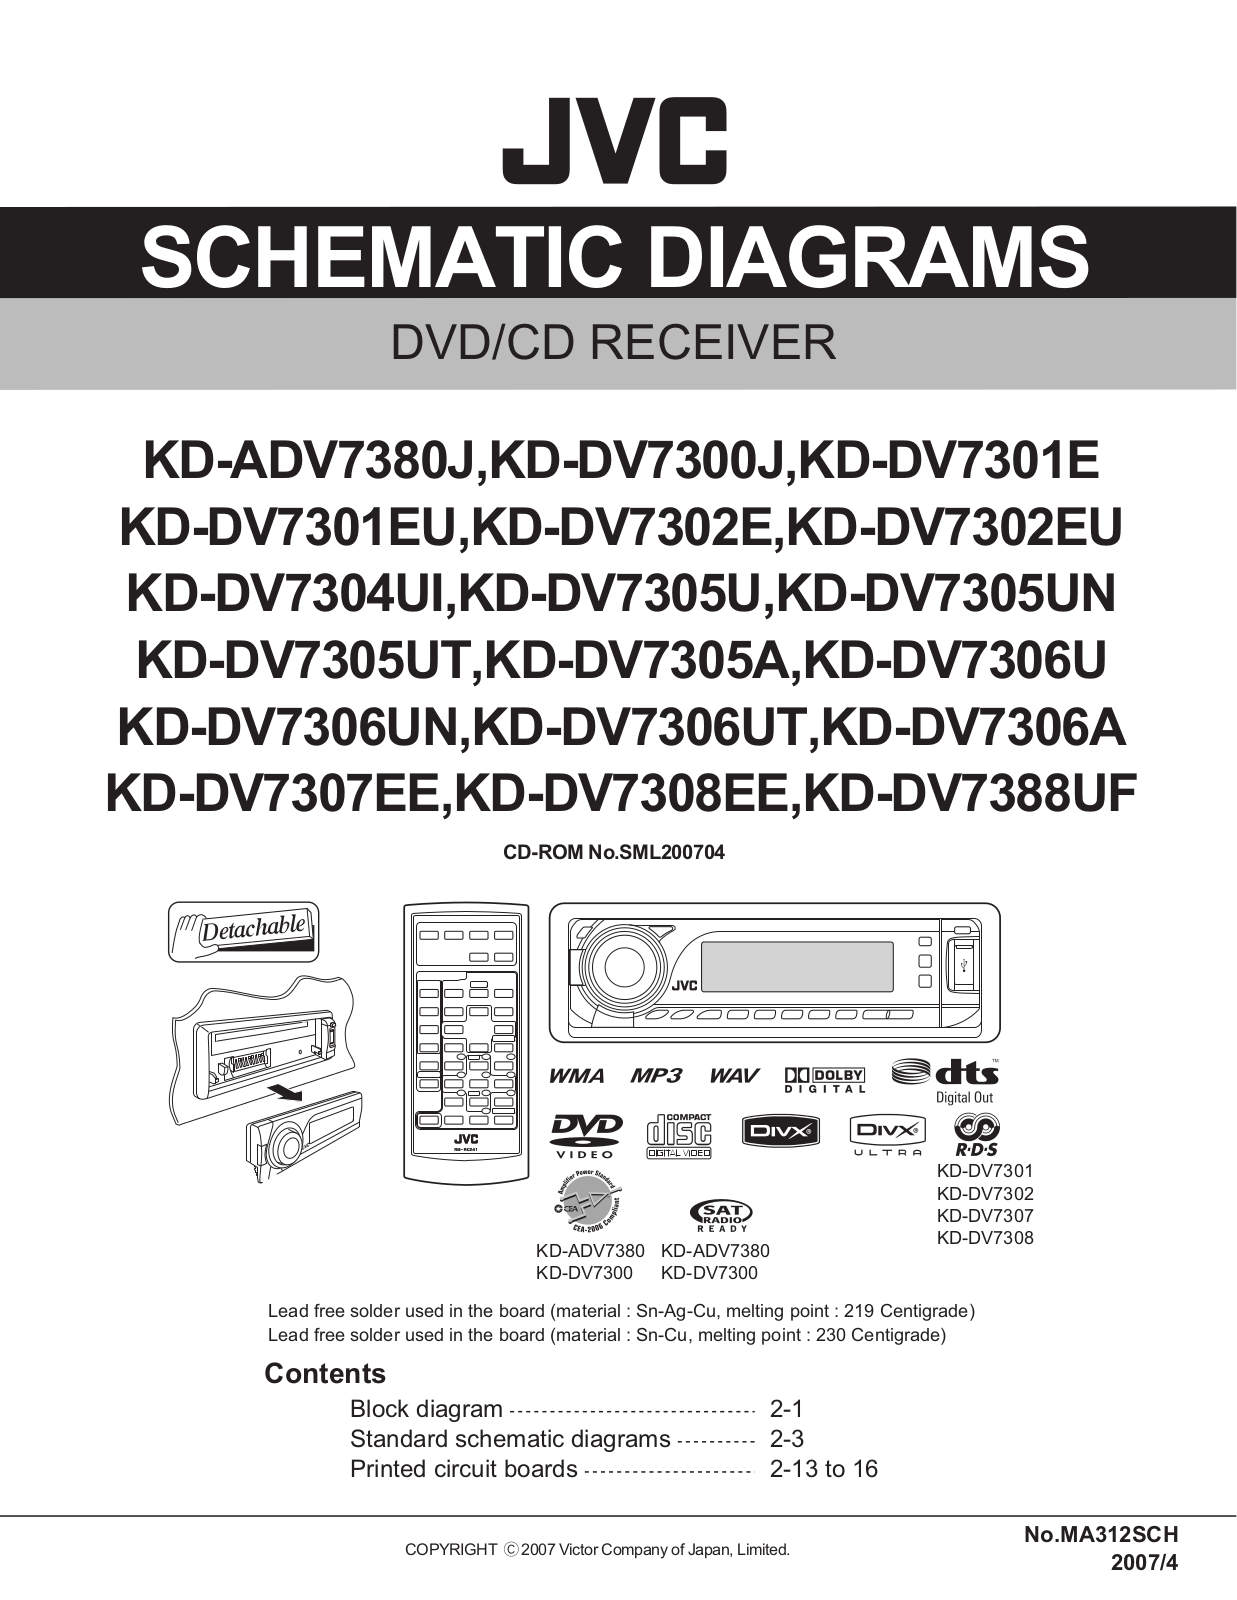 JVC KD-ADV7380J, KD-DV7300J, KD-DV7301E, KD-DV7301EU, KD-DV7302E Service Manual